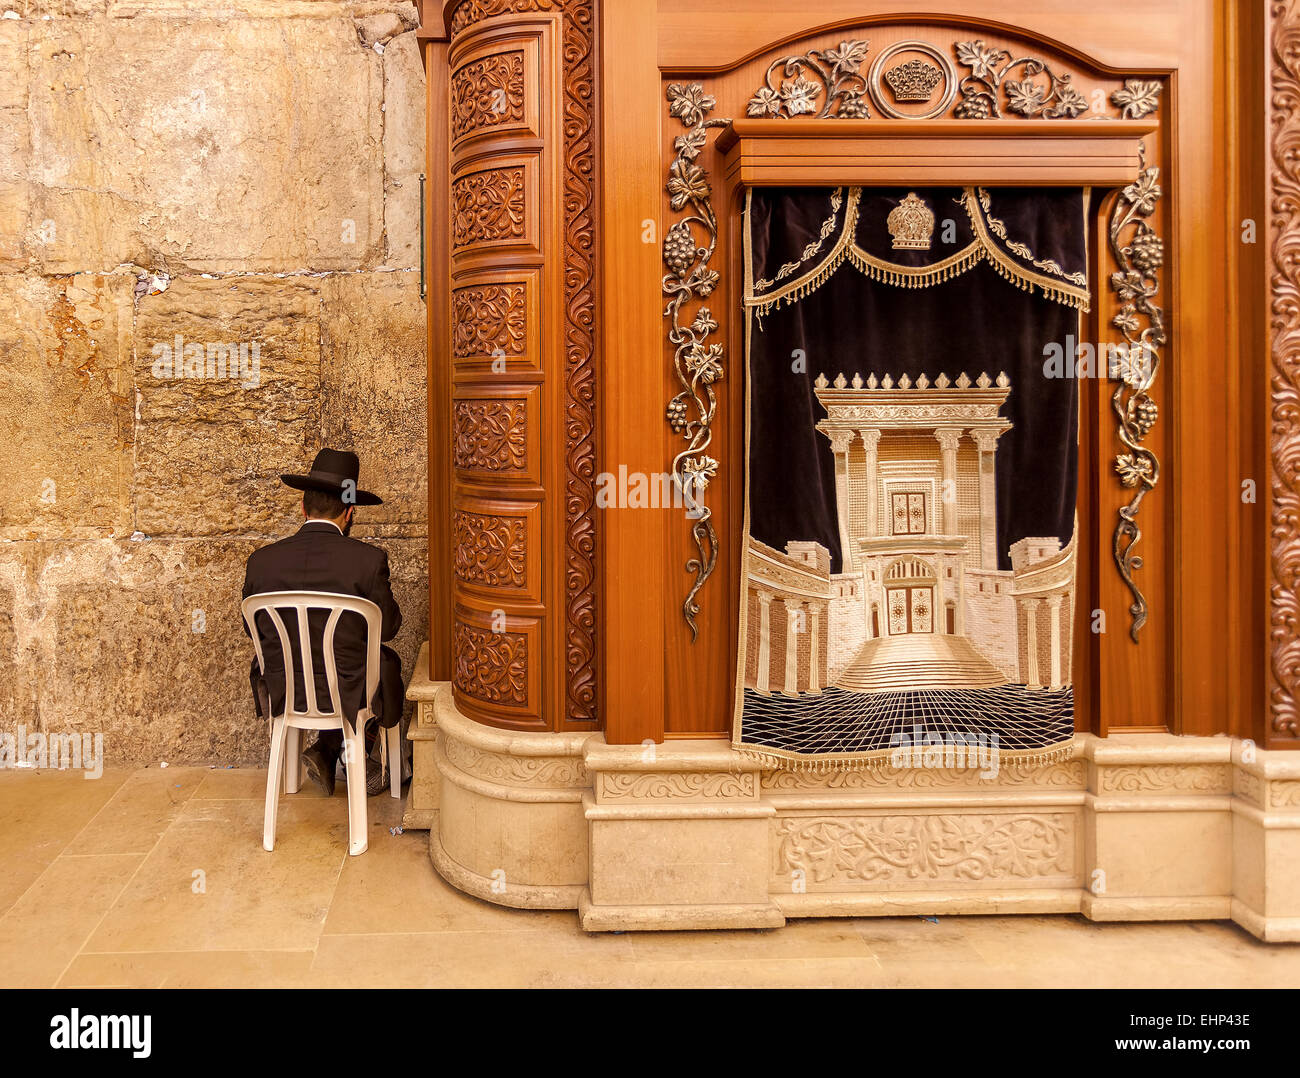 Carving Holzgehäuse mit Torarollen und Gebet in Höhle Synagoge in Jerusalem, Israel. Stockfoto